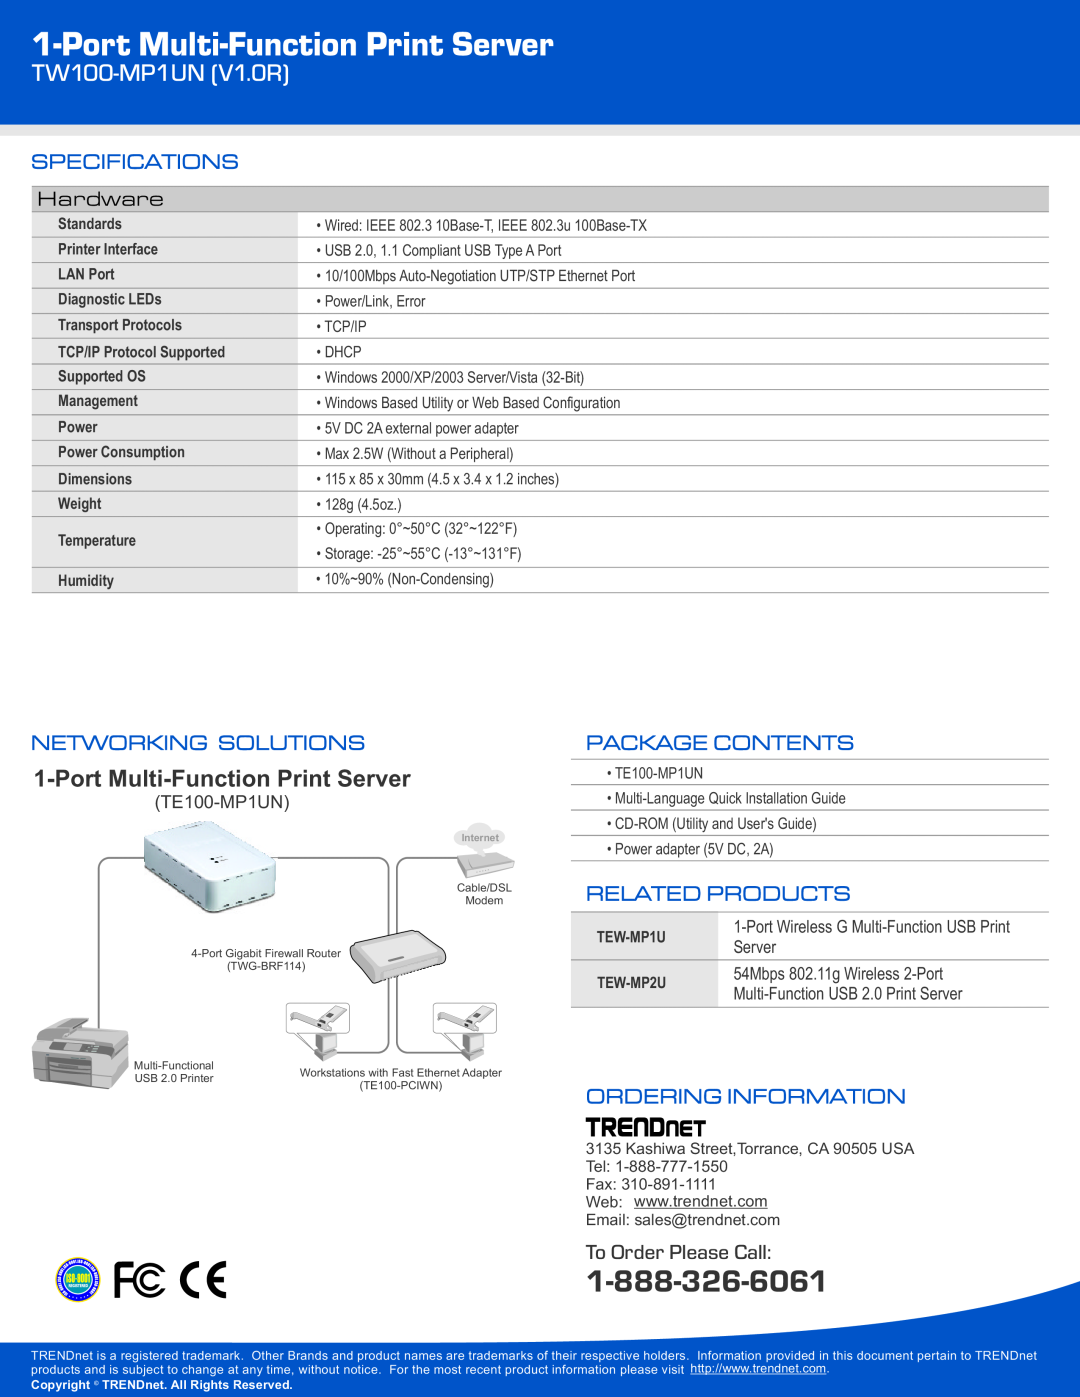 TRENDnet TE100-MP1UN Port Multi-Function Print Server, TW100-MP1UN V1.0R, Specifications, Hardware, Networking Solutions 